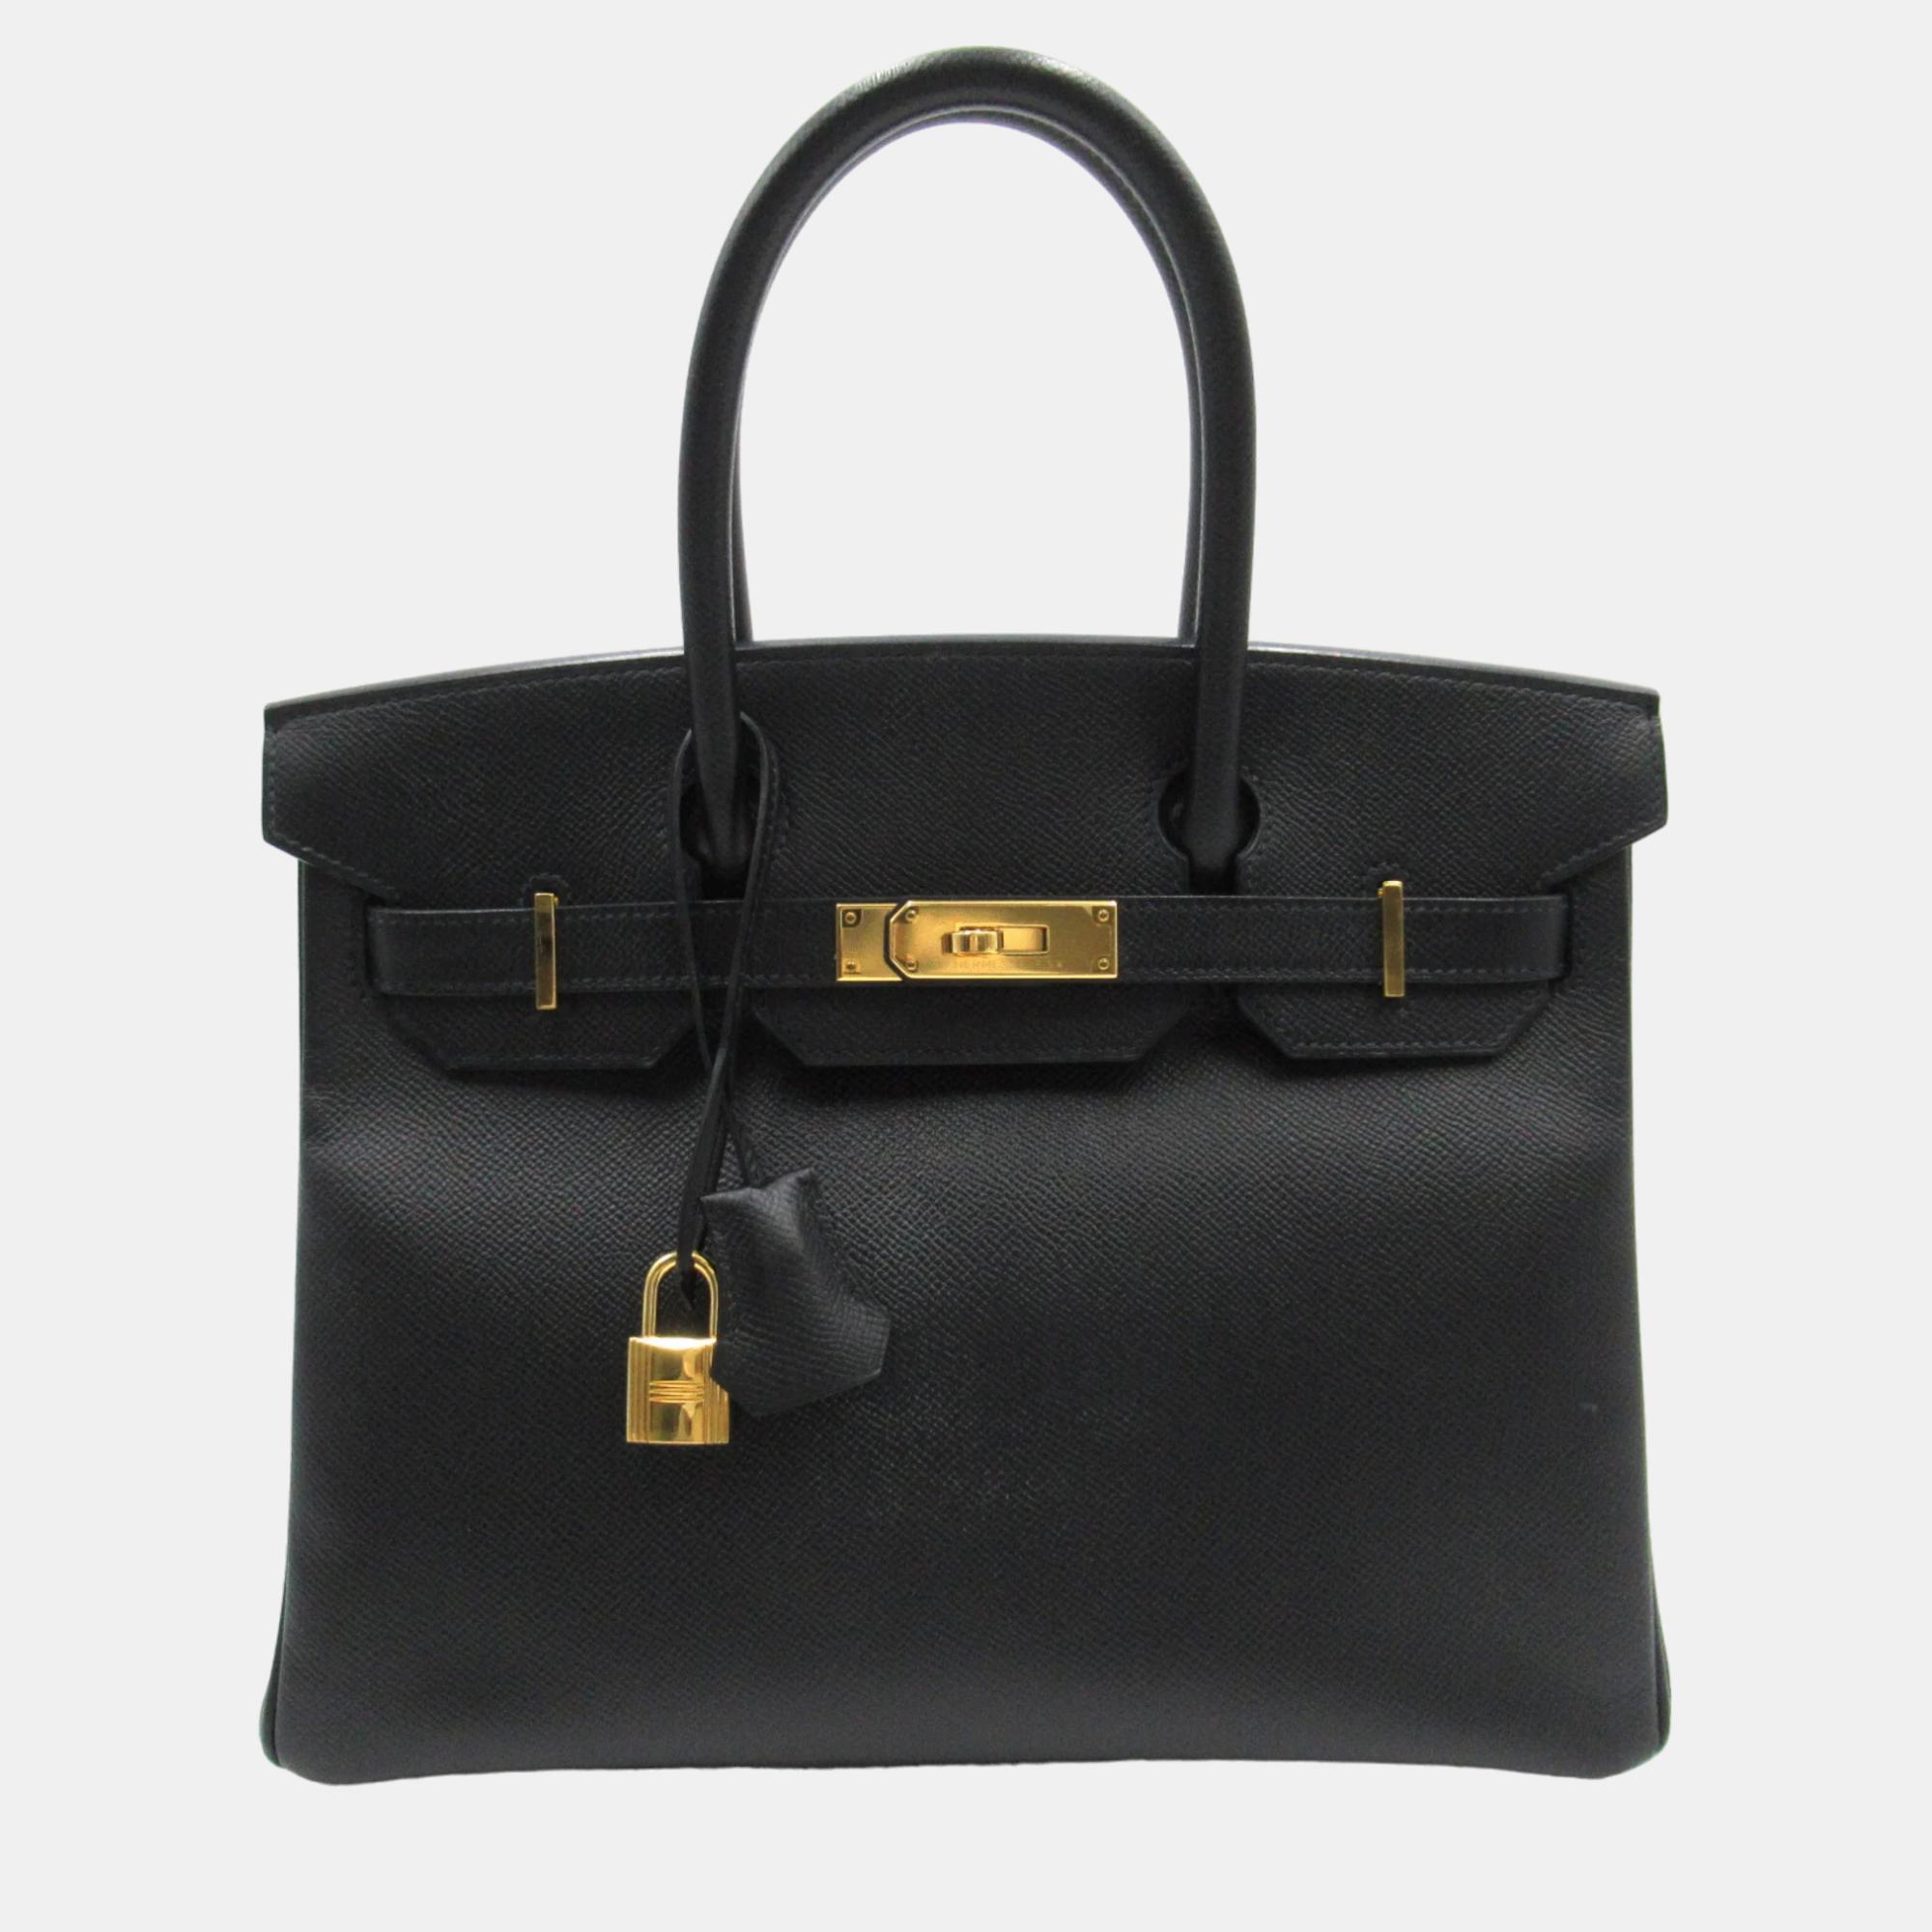 Hermes black epsom leather birkin 30 tote bag